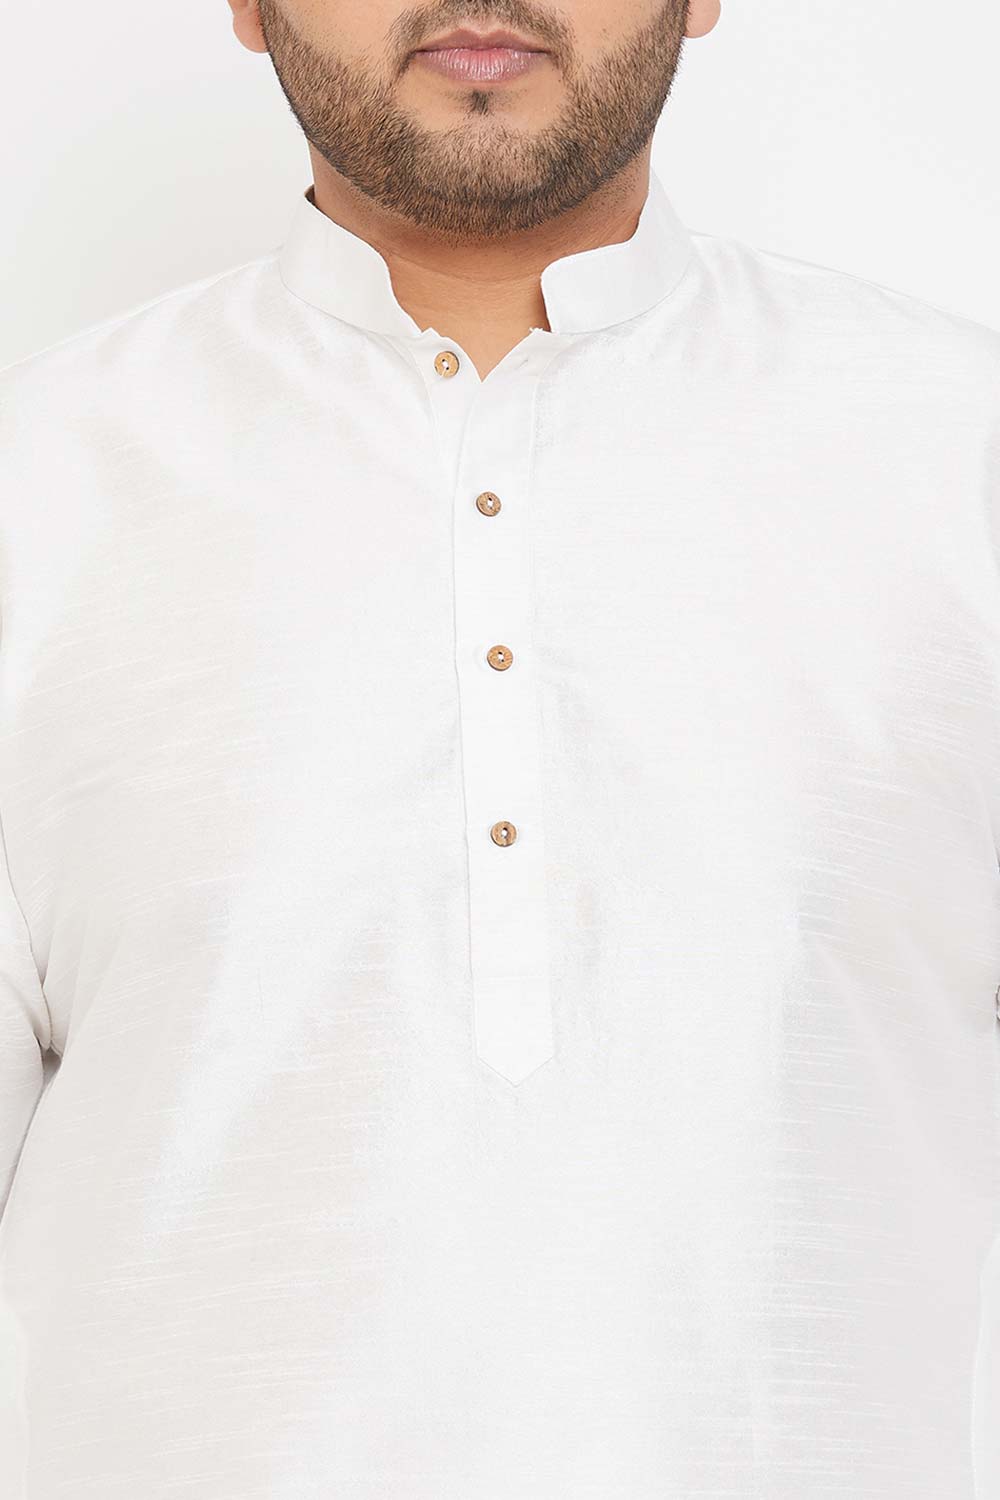 Buy Men's Silk Blend Solid Kurta Set in White - Zoom in